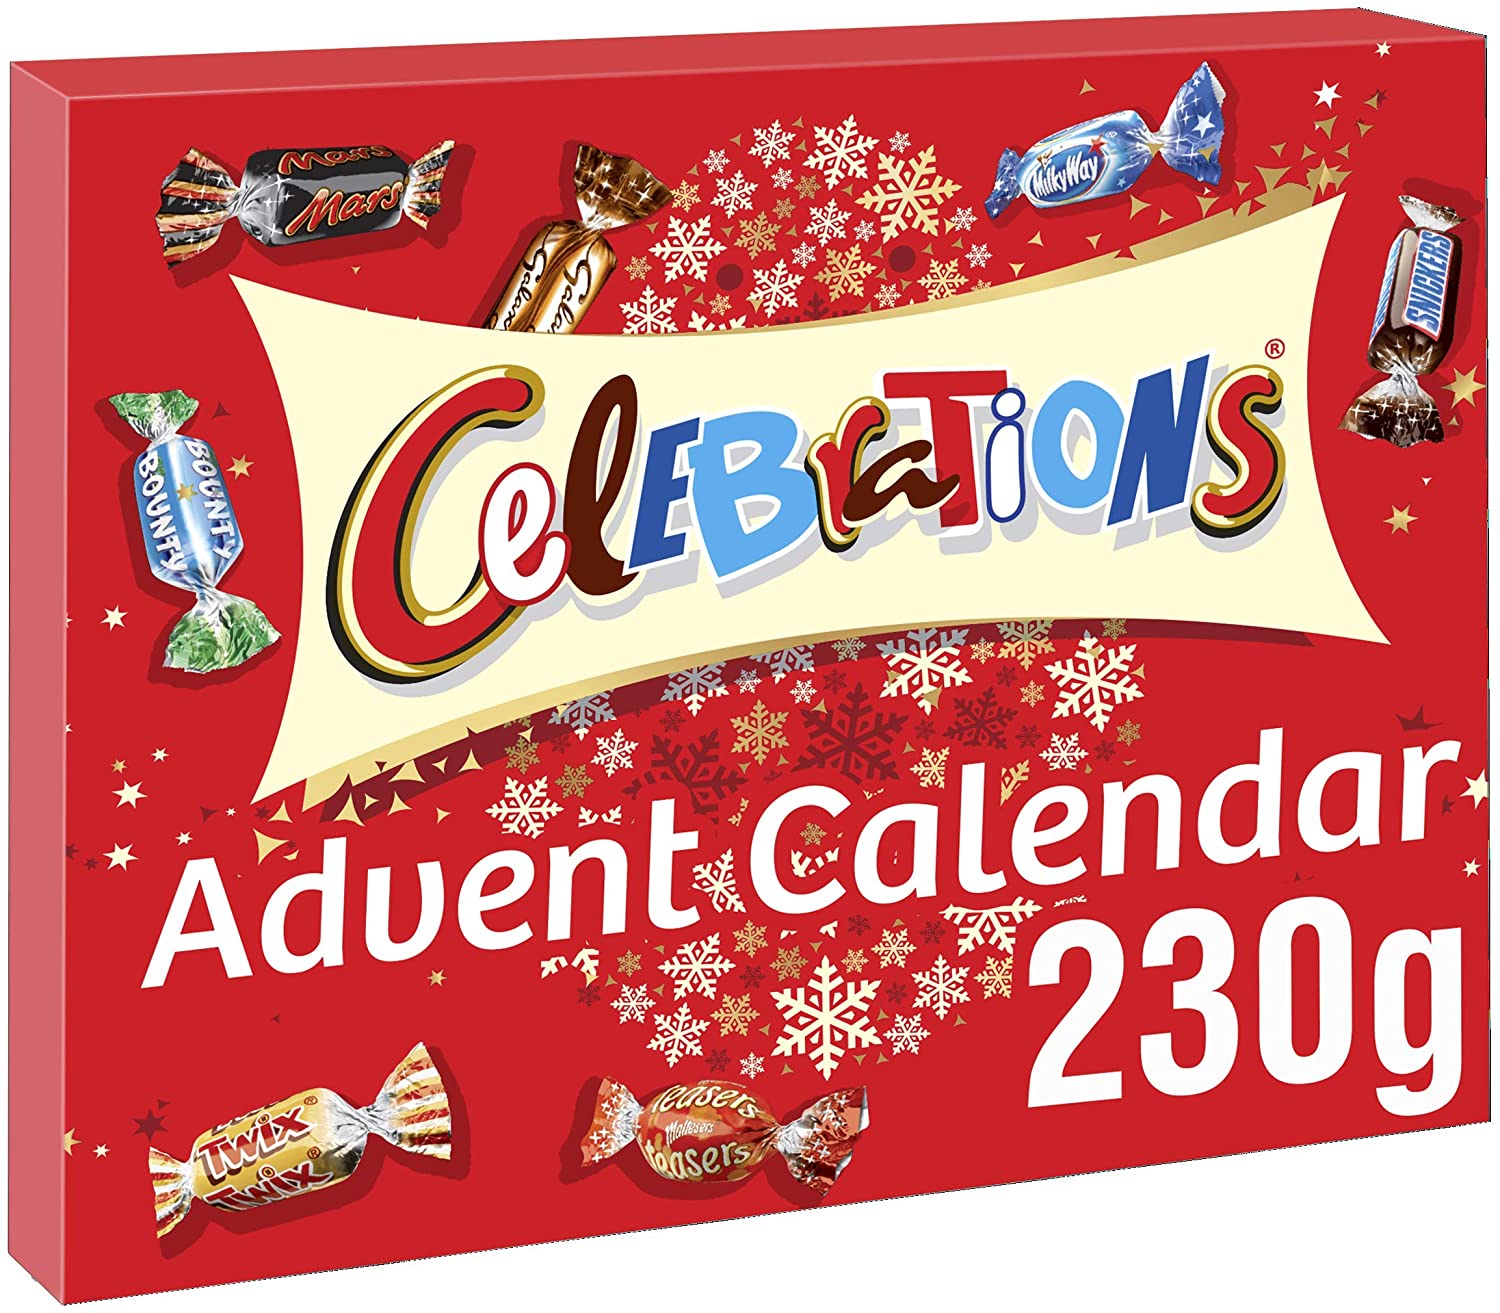 Celebrations Giant Chocolate Advent Calendar 2020